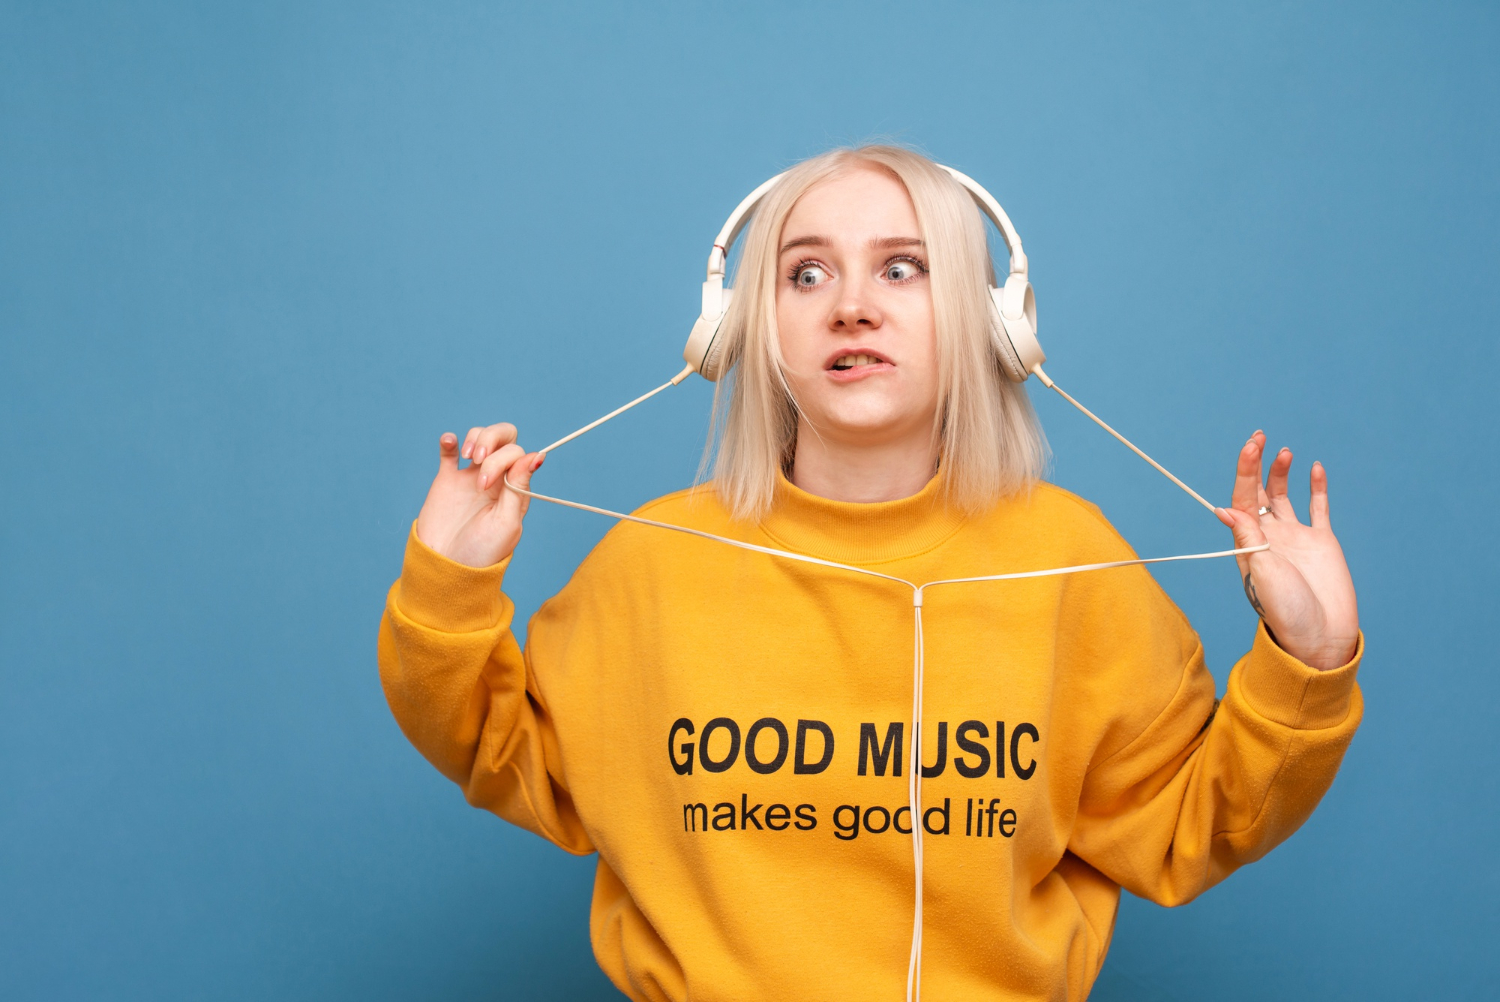 Cat de importanta este muzica in viata noastra?